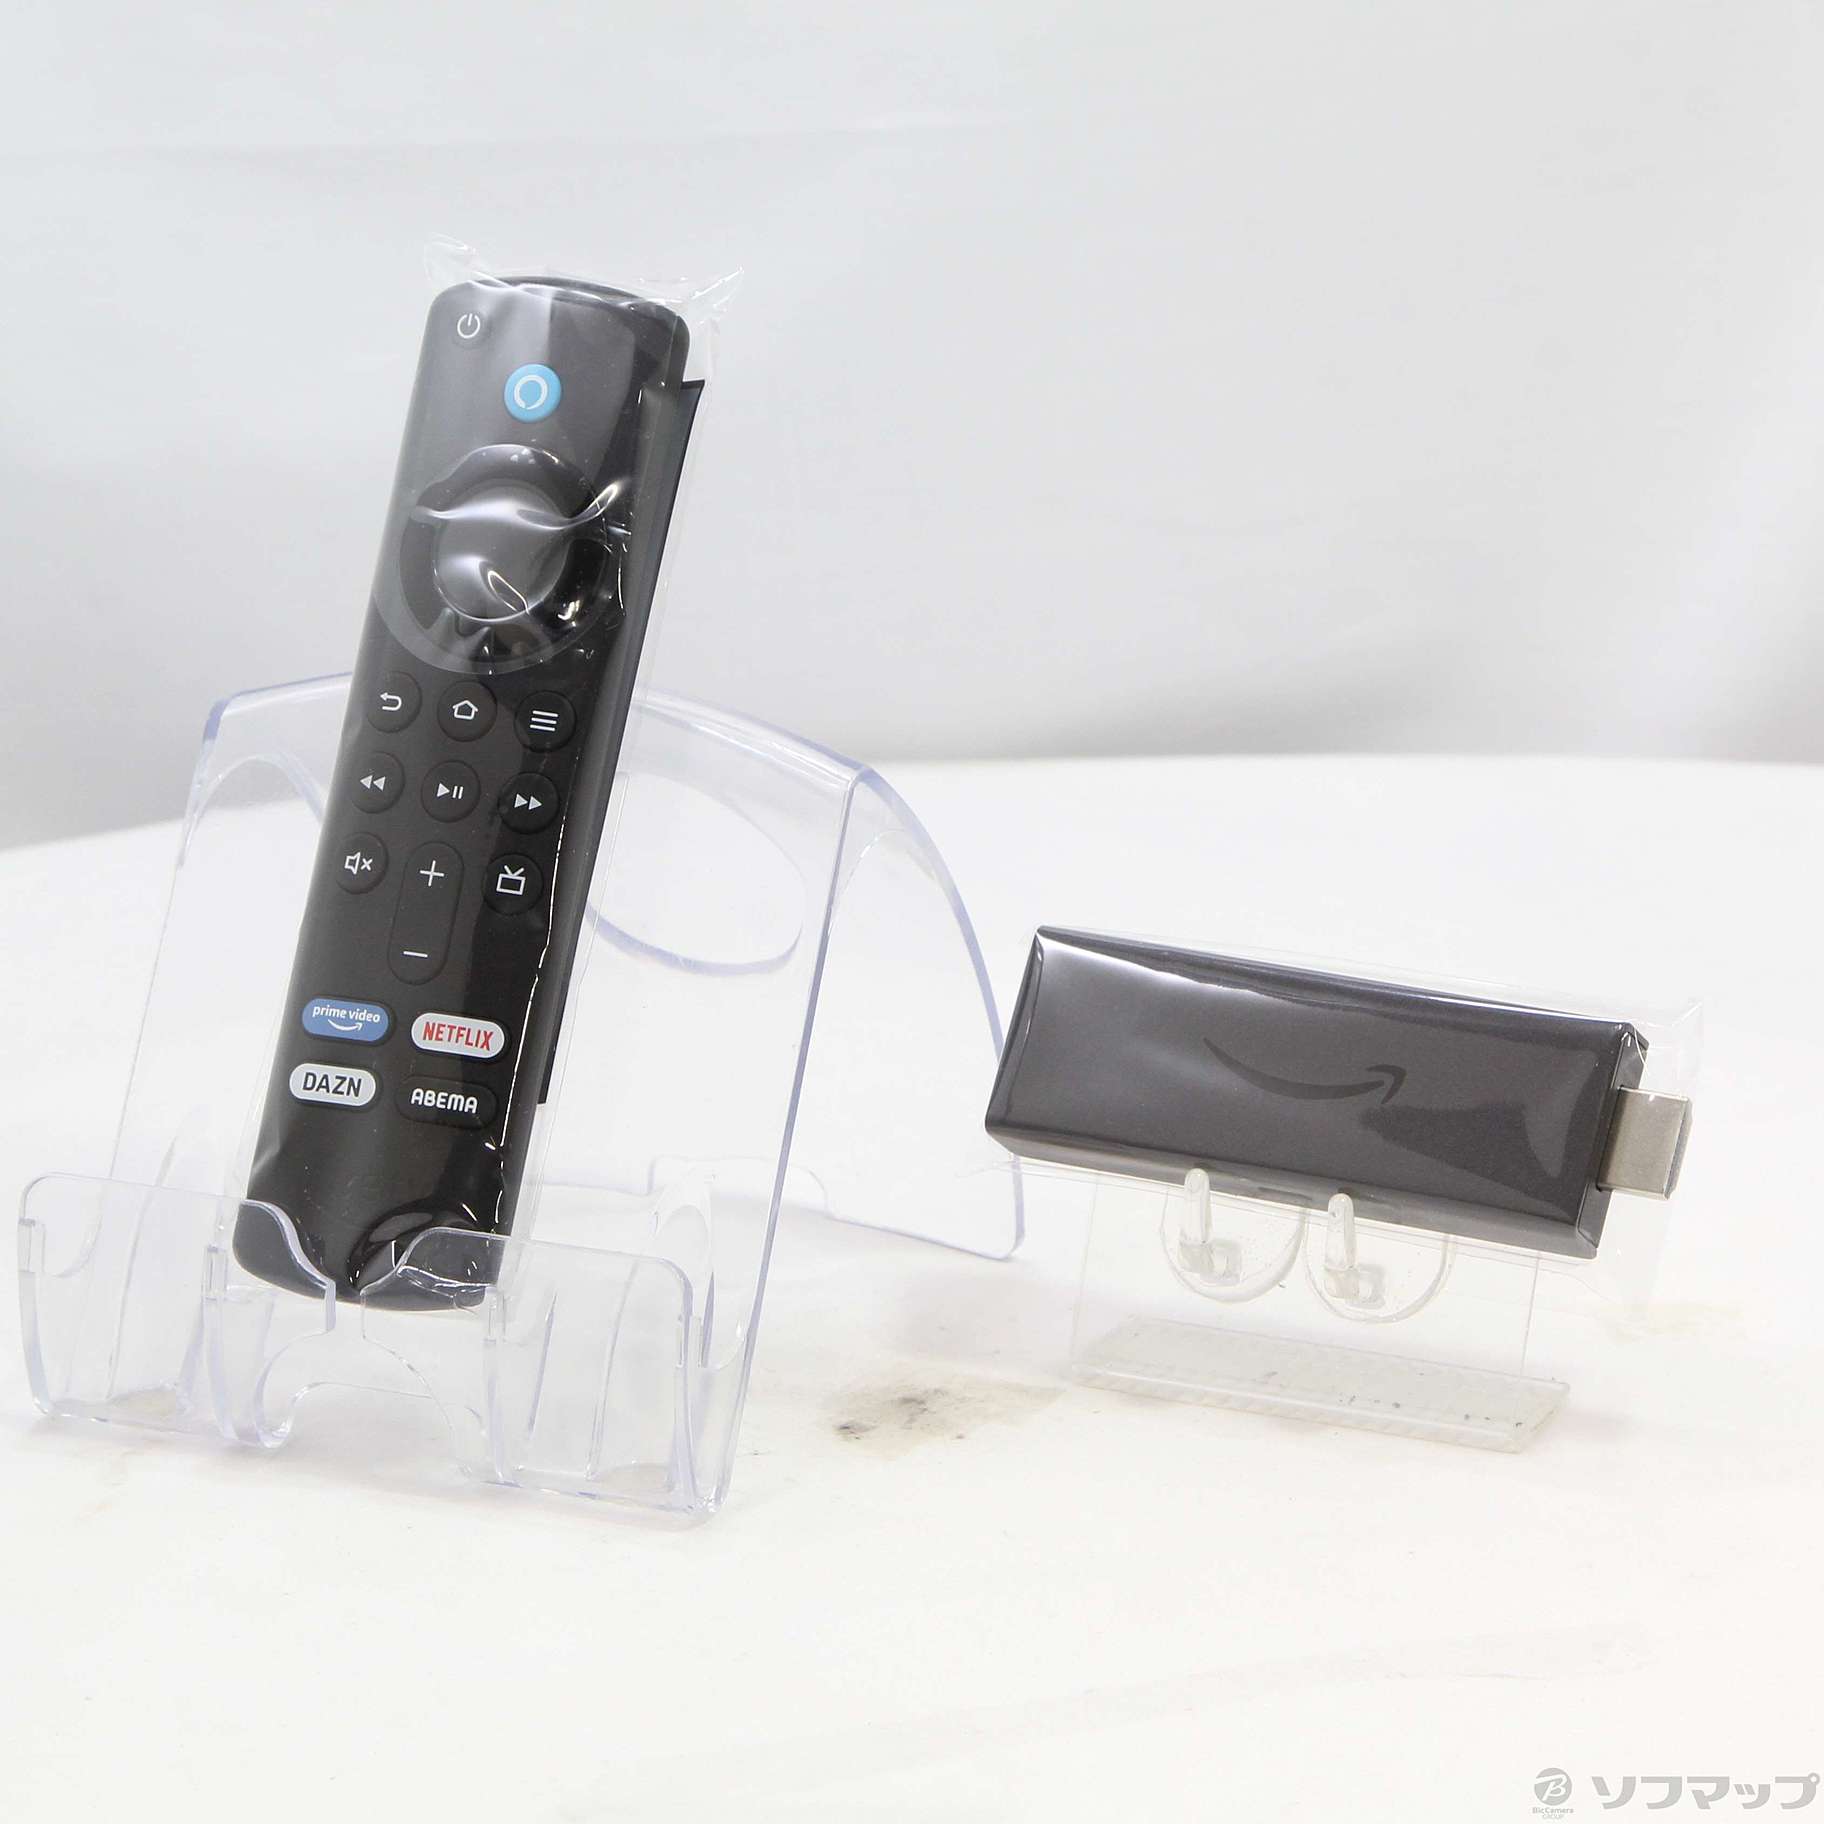 Fire TV Stick - Alexa対応音声認識リモコン付属 新品未開封